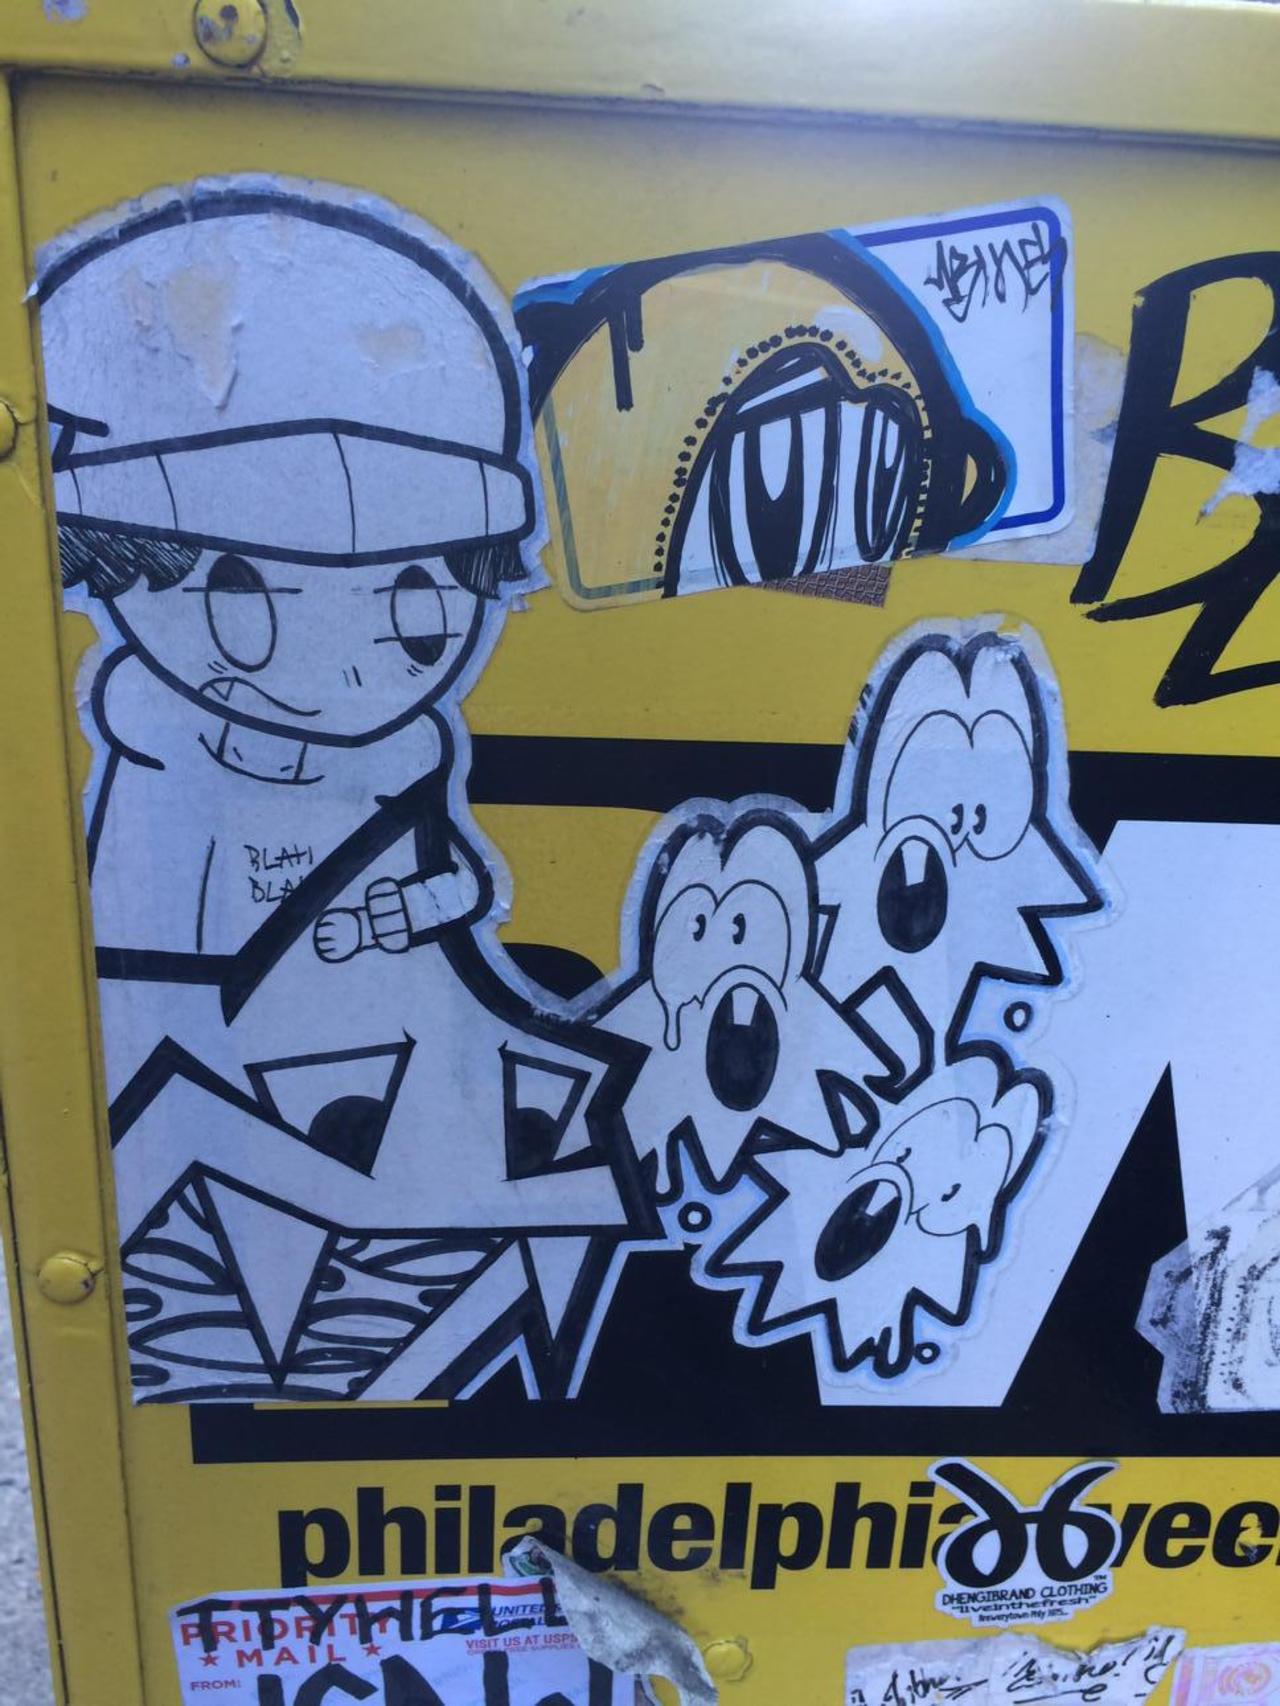 #Philly #ArT #StreetArT #CommonUnity #Graffiti #LoVE https://t.co/0rZTMnZjvG